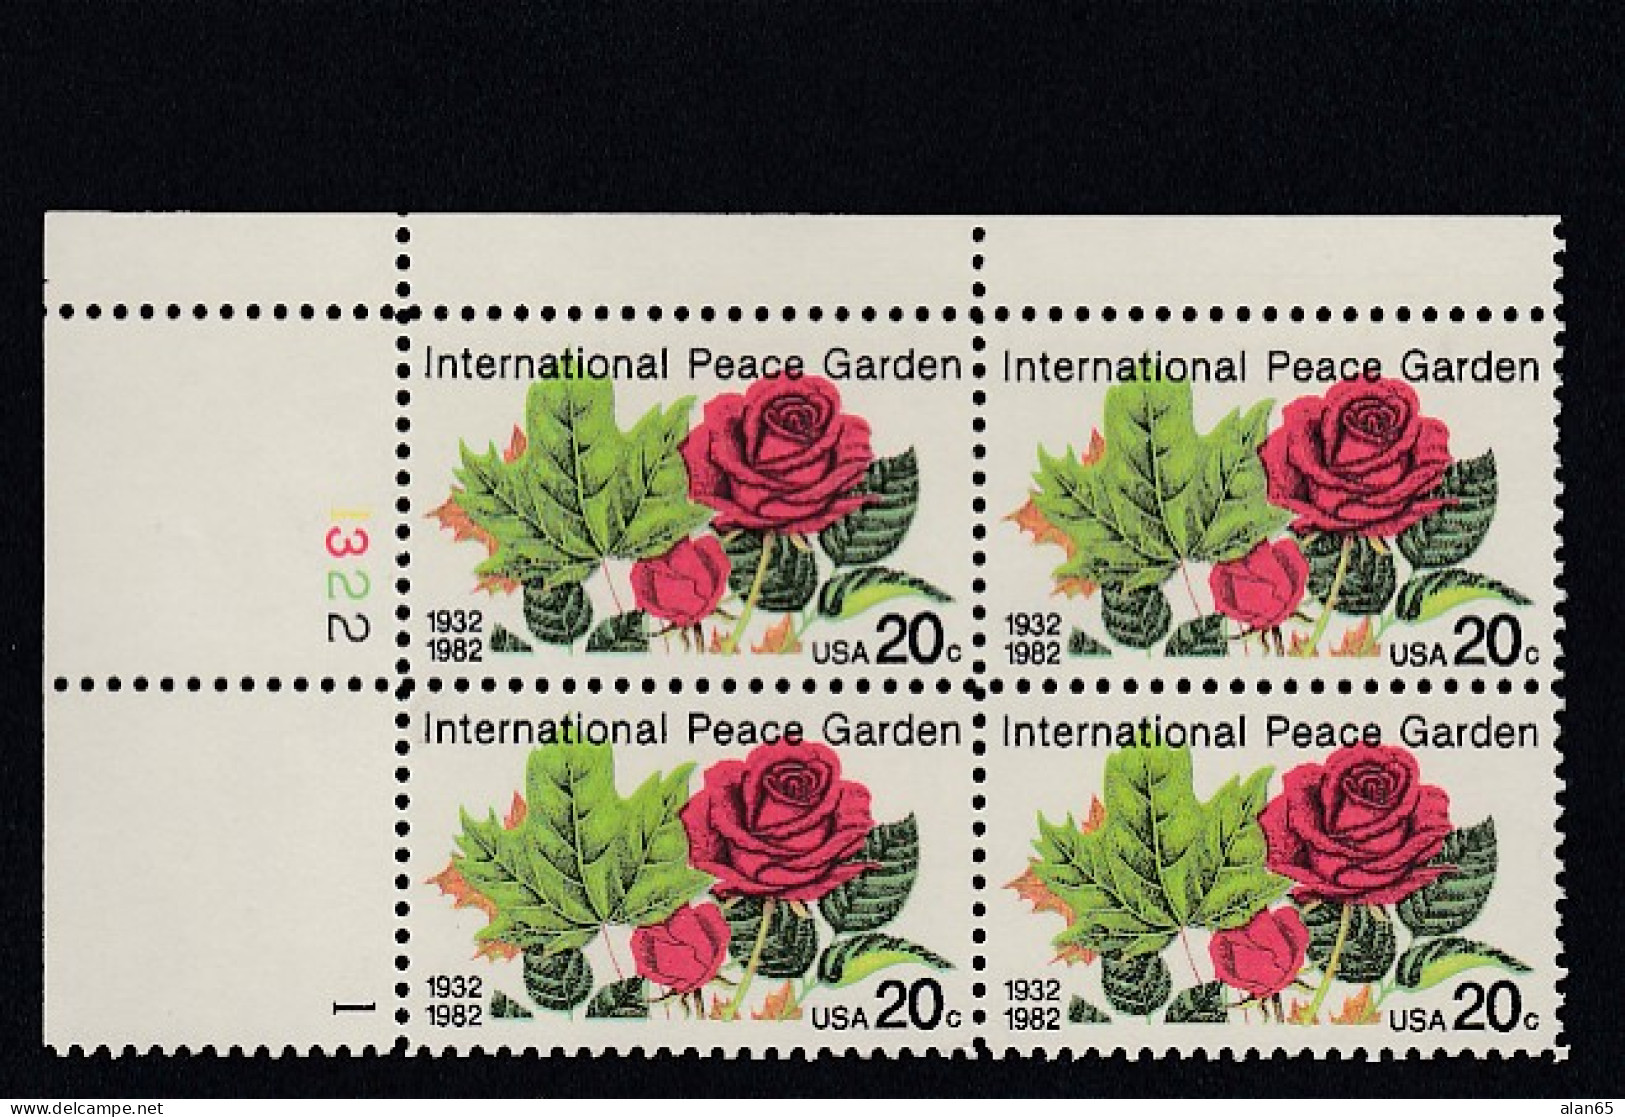 Sc#2014, Plate # Block Of 4 20-cent, International Peace Garden, Flowers Rose, US Postage Stamps - Plate Blocks & Sheetlets